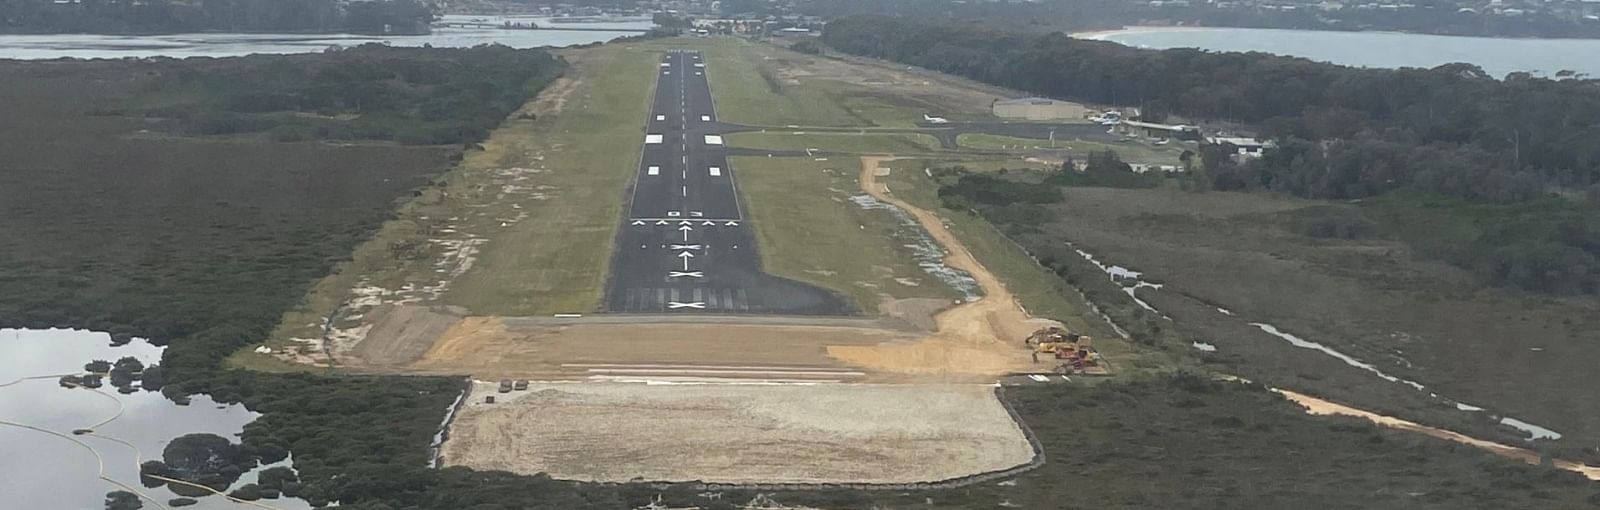 Merimbula airport runway extension.